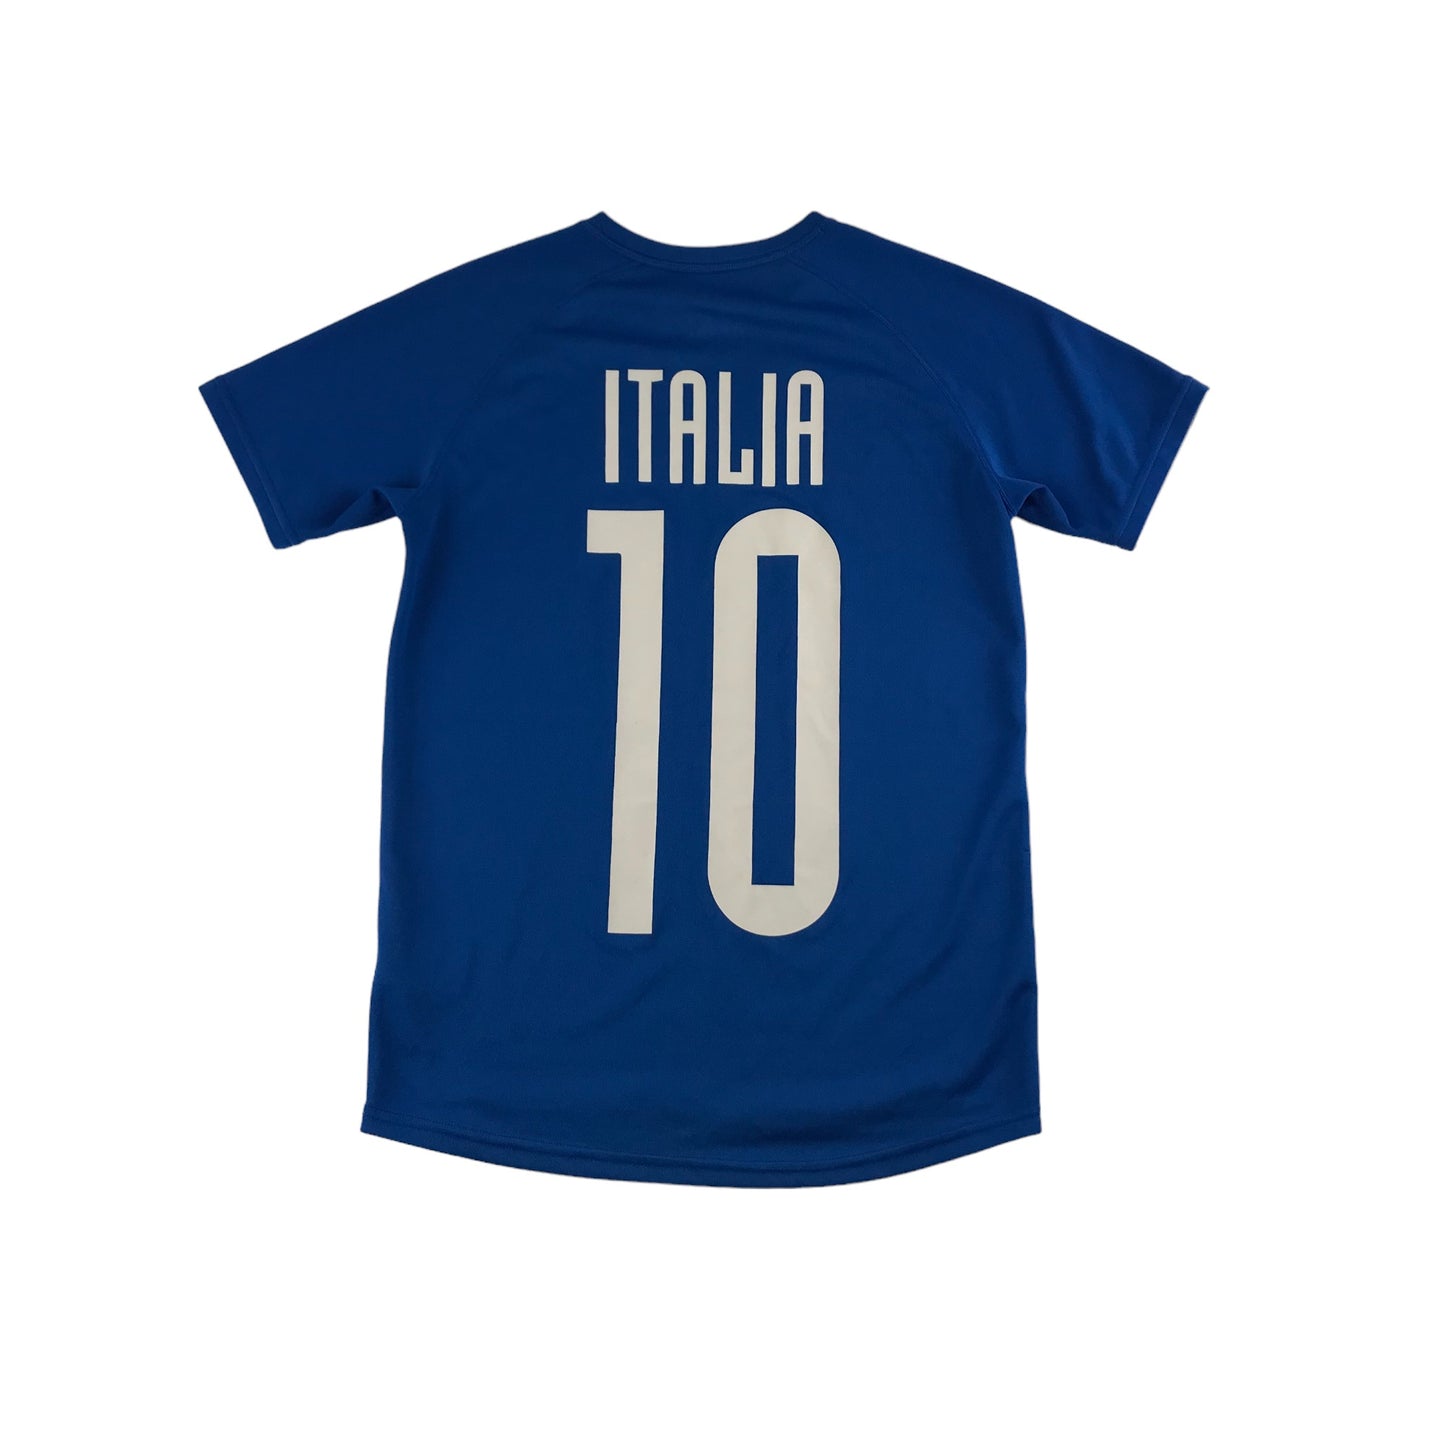 H&M Sports Top Age 11-13 Blue Italia Football Top